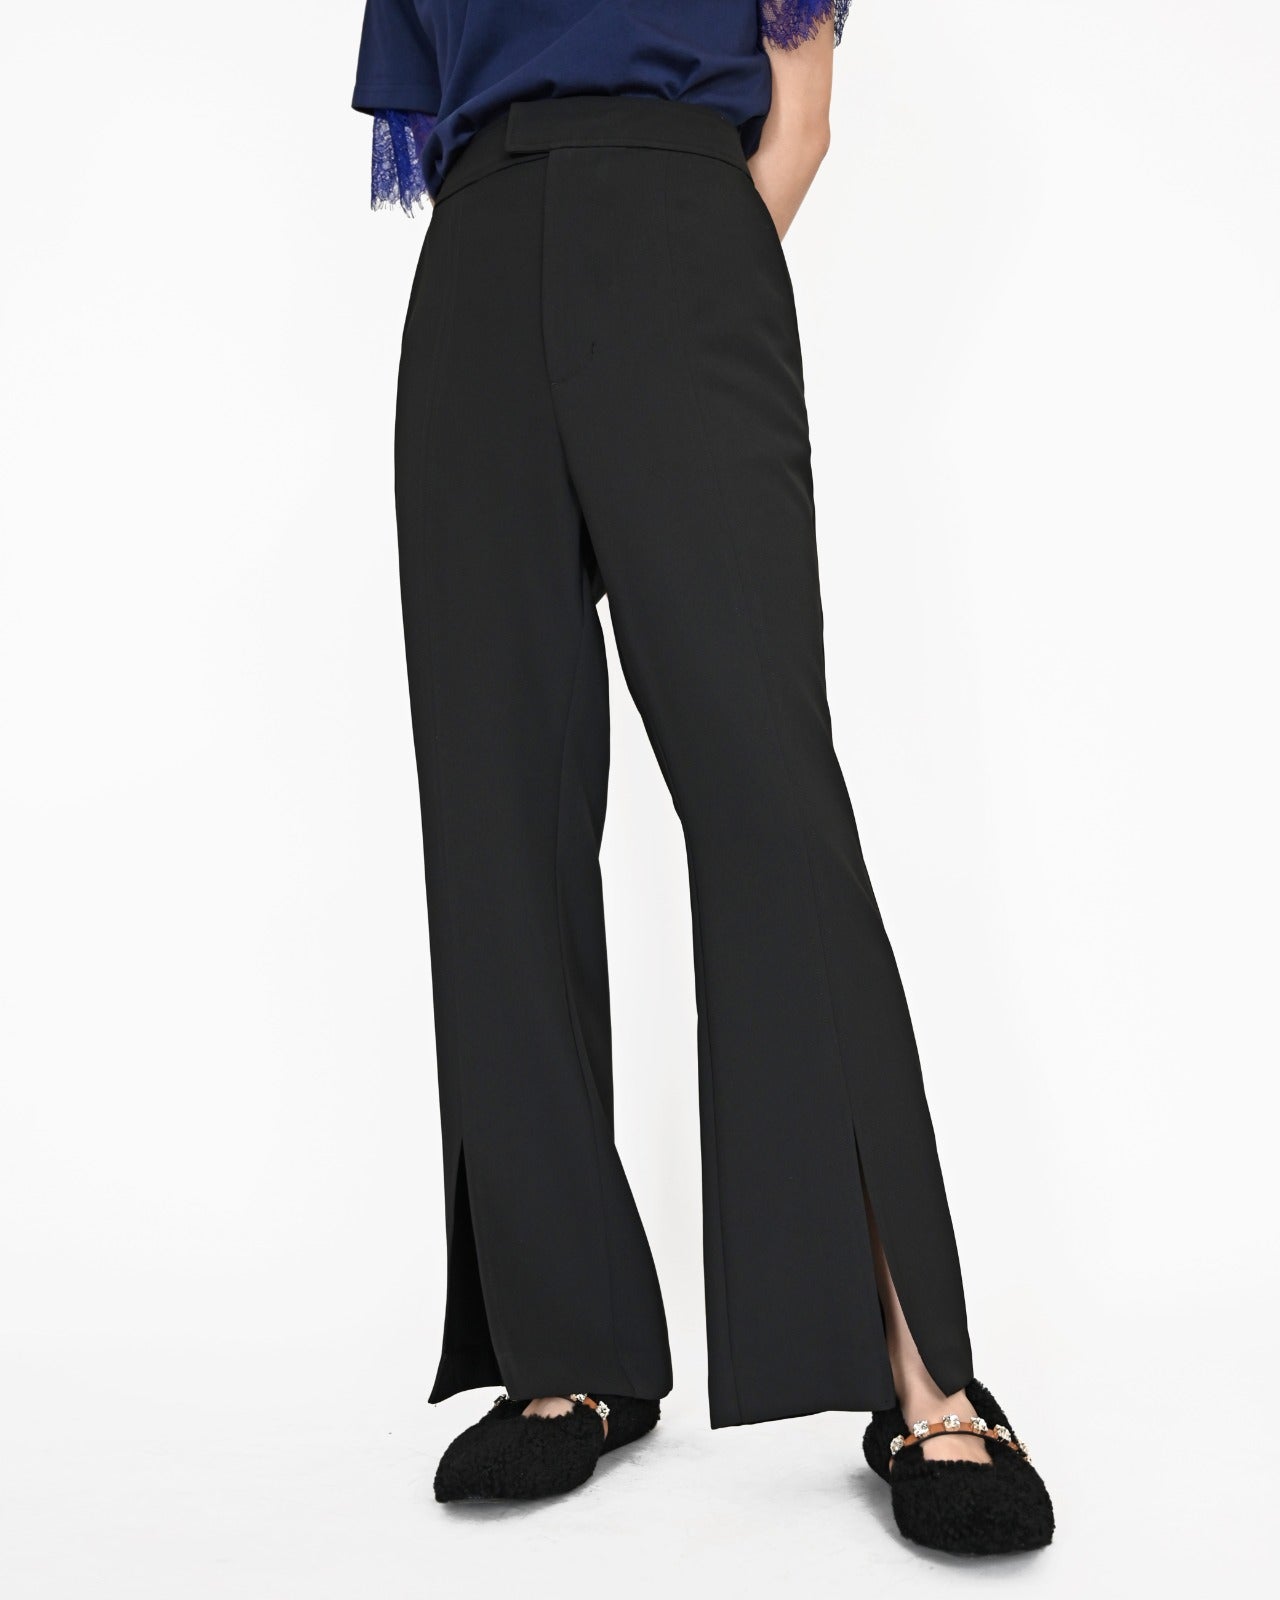 aalis PEMA front slit suiting pants (Black)